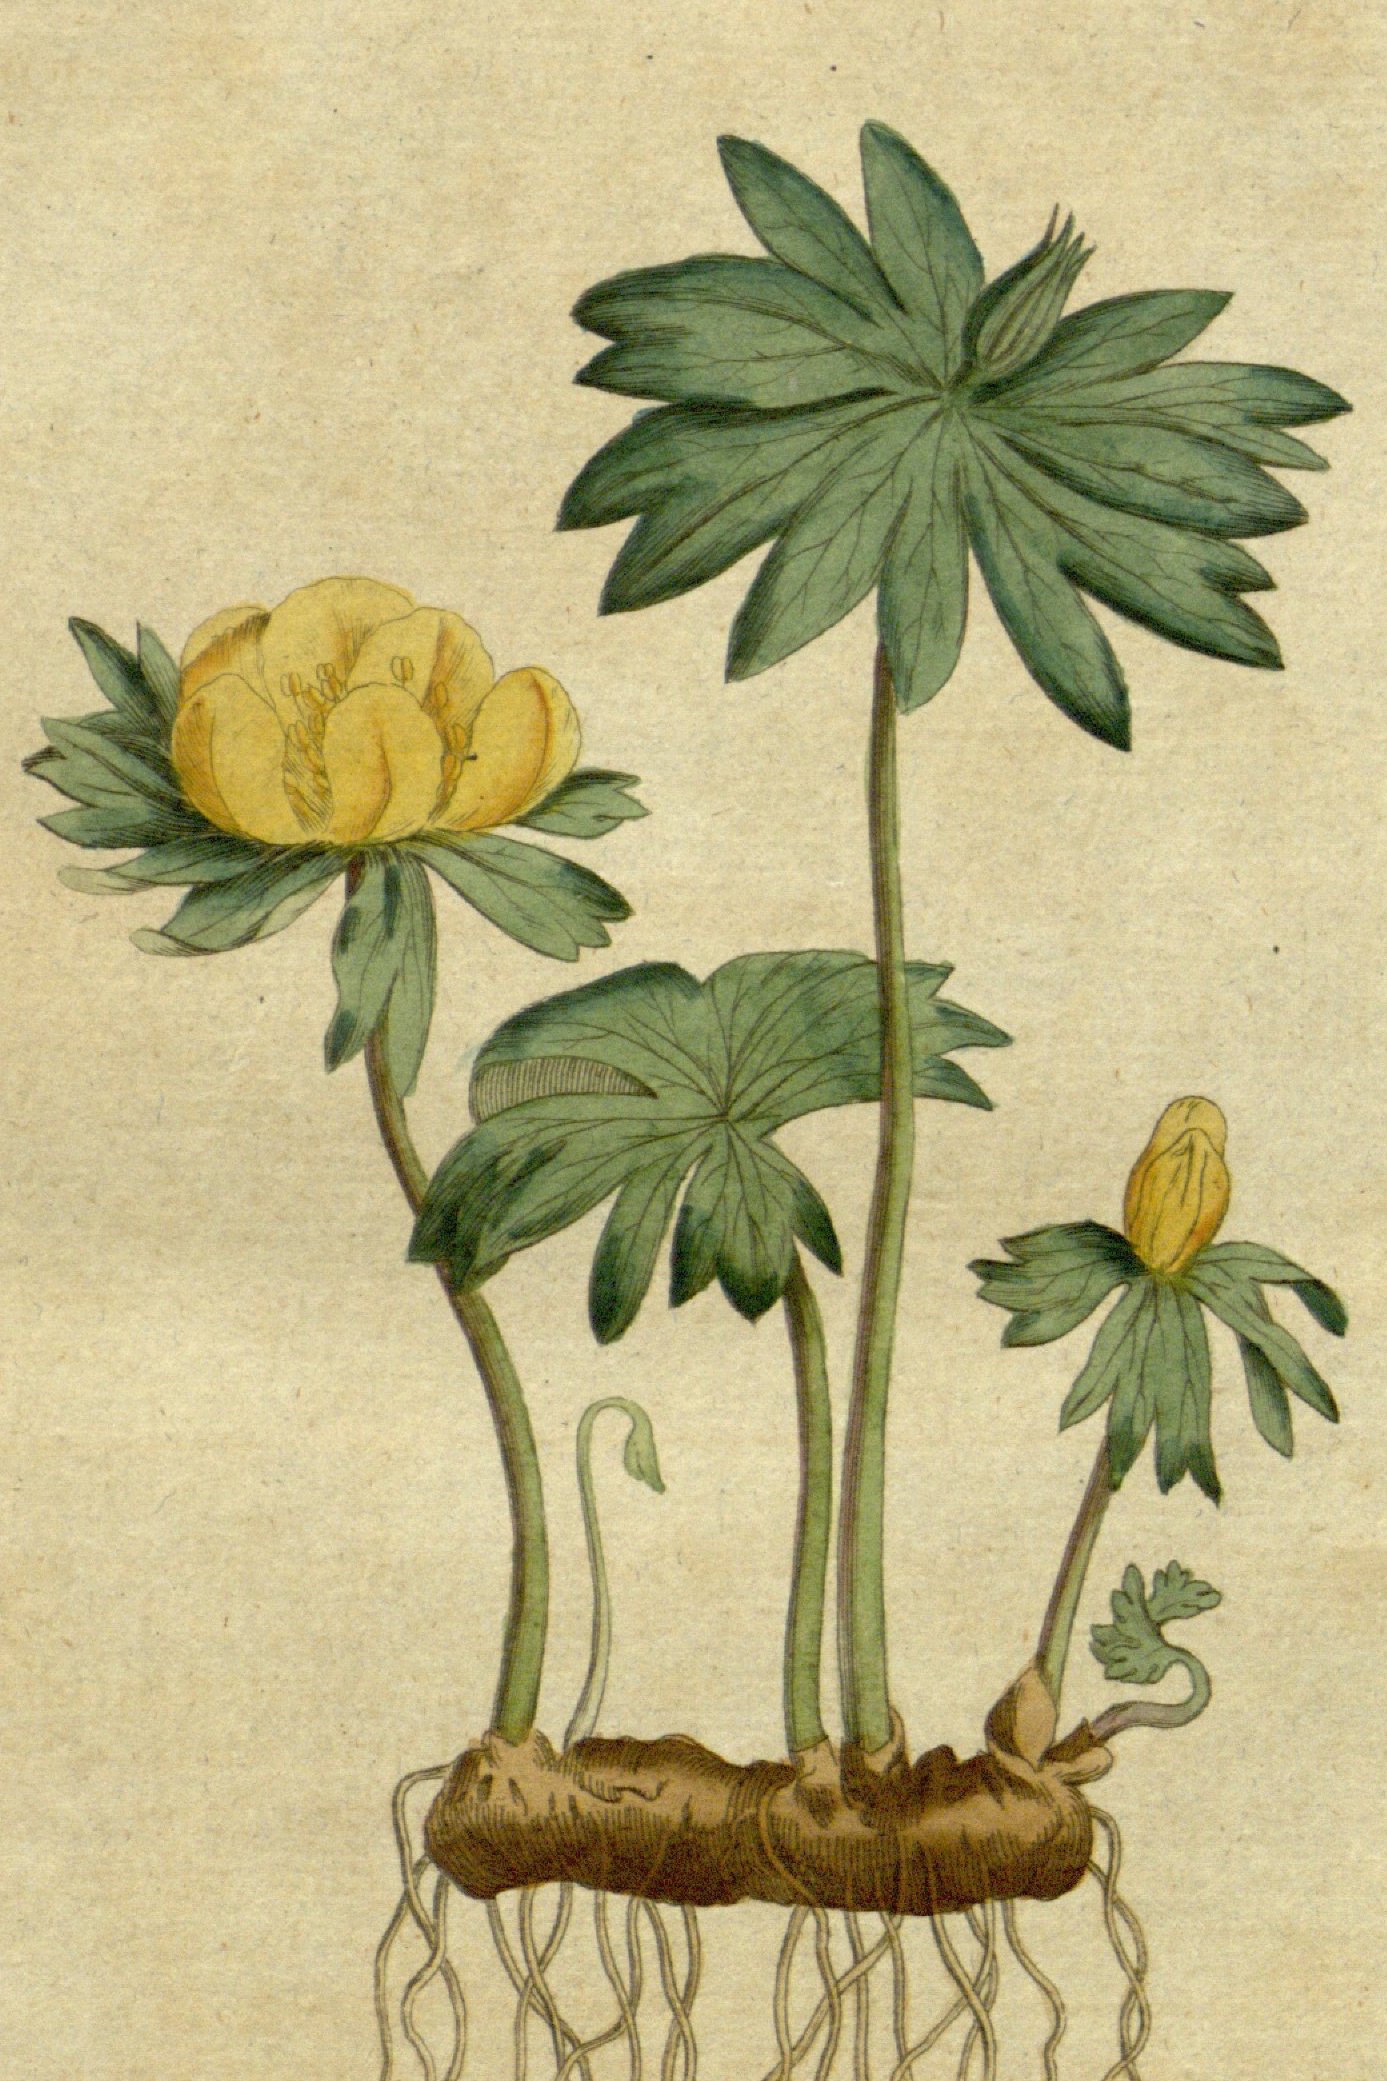 Winter Aconite botanical illustration by william Curtis circa 1787.